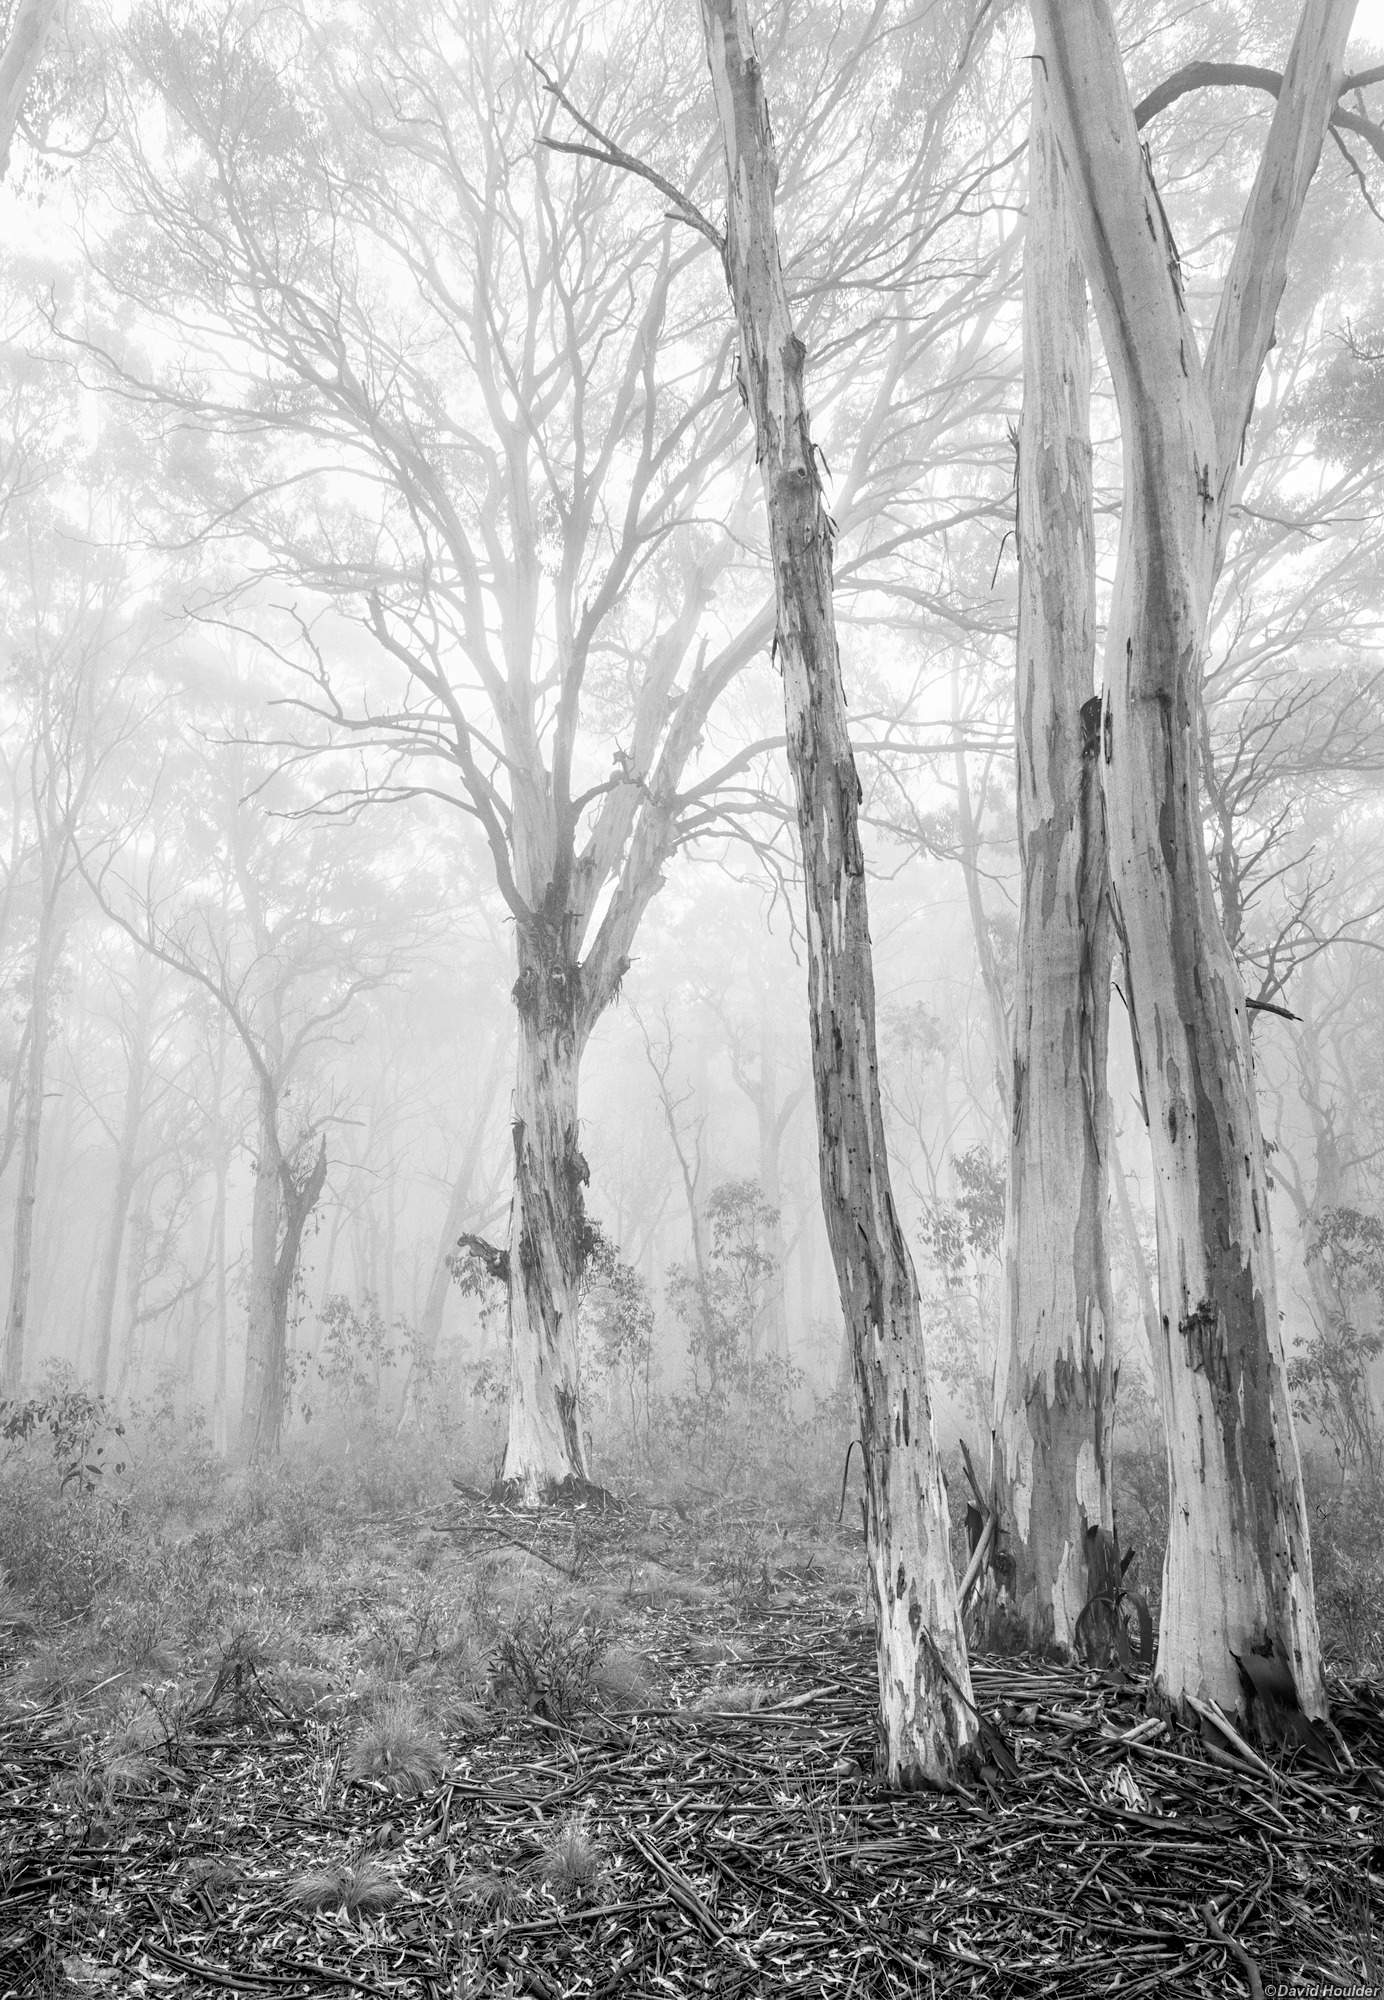 Large eucalypt trees in the fog